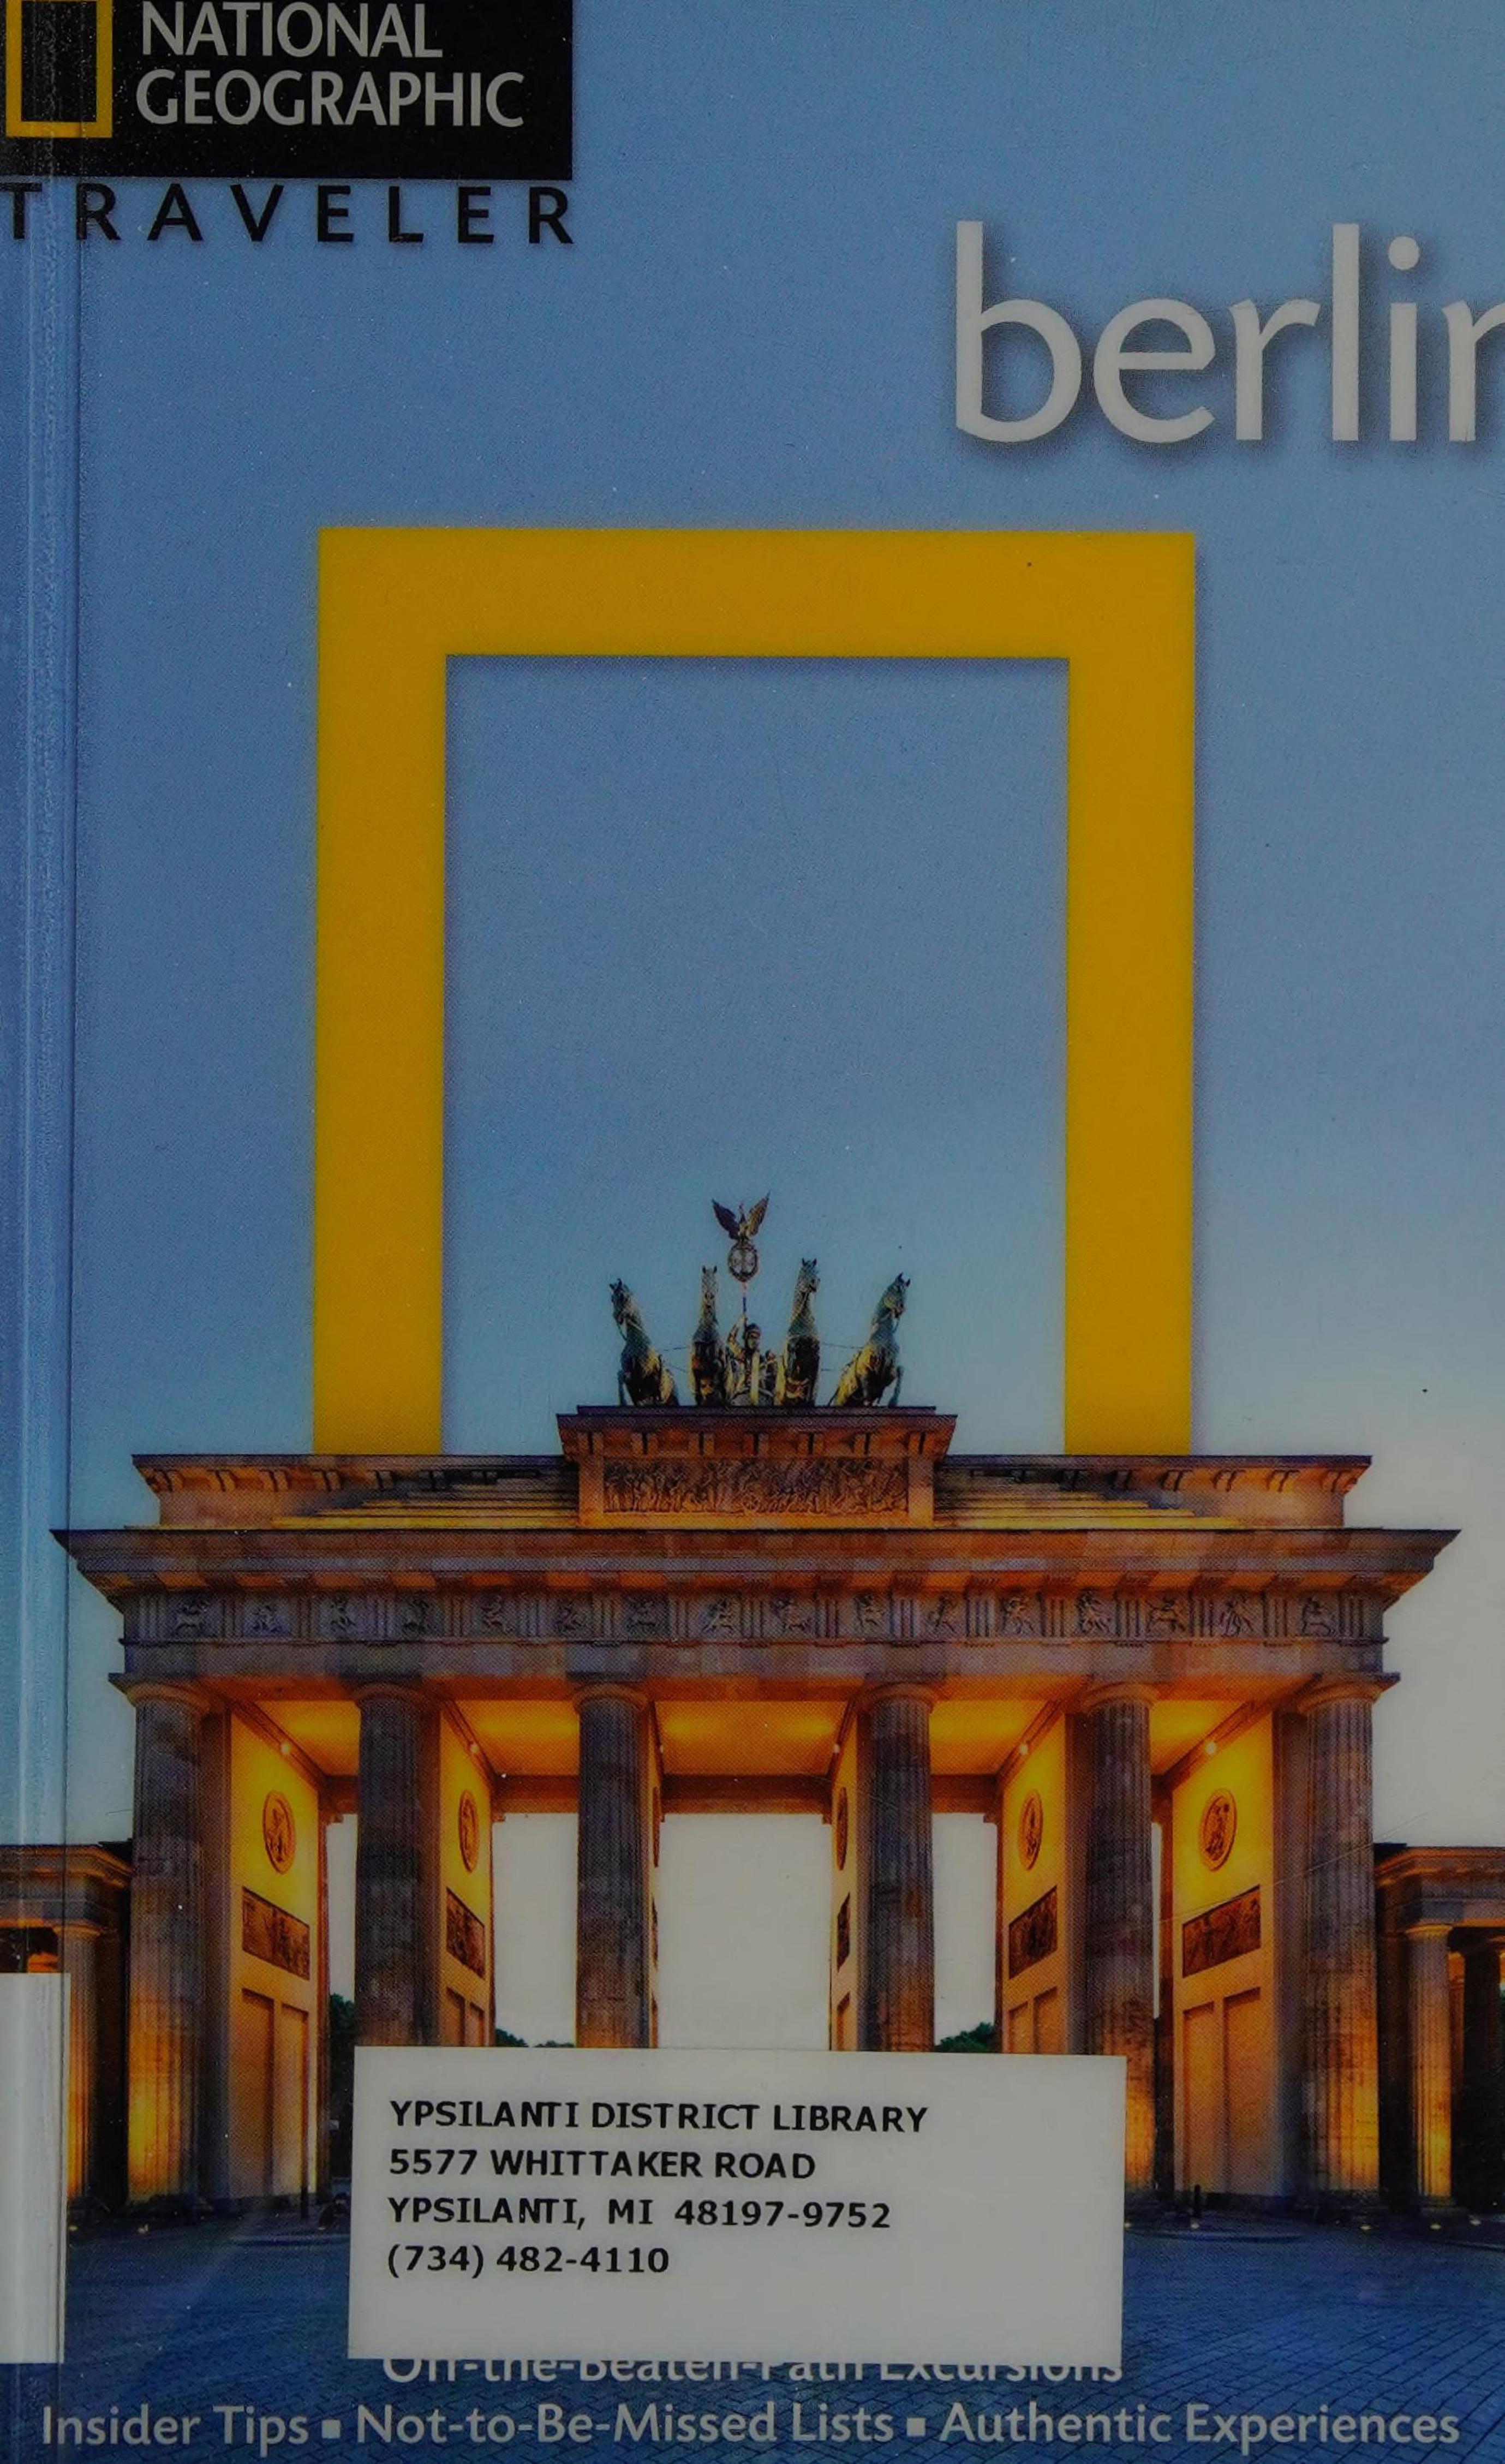 National Geographic Traveler: Berlin by Damien Simonis